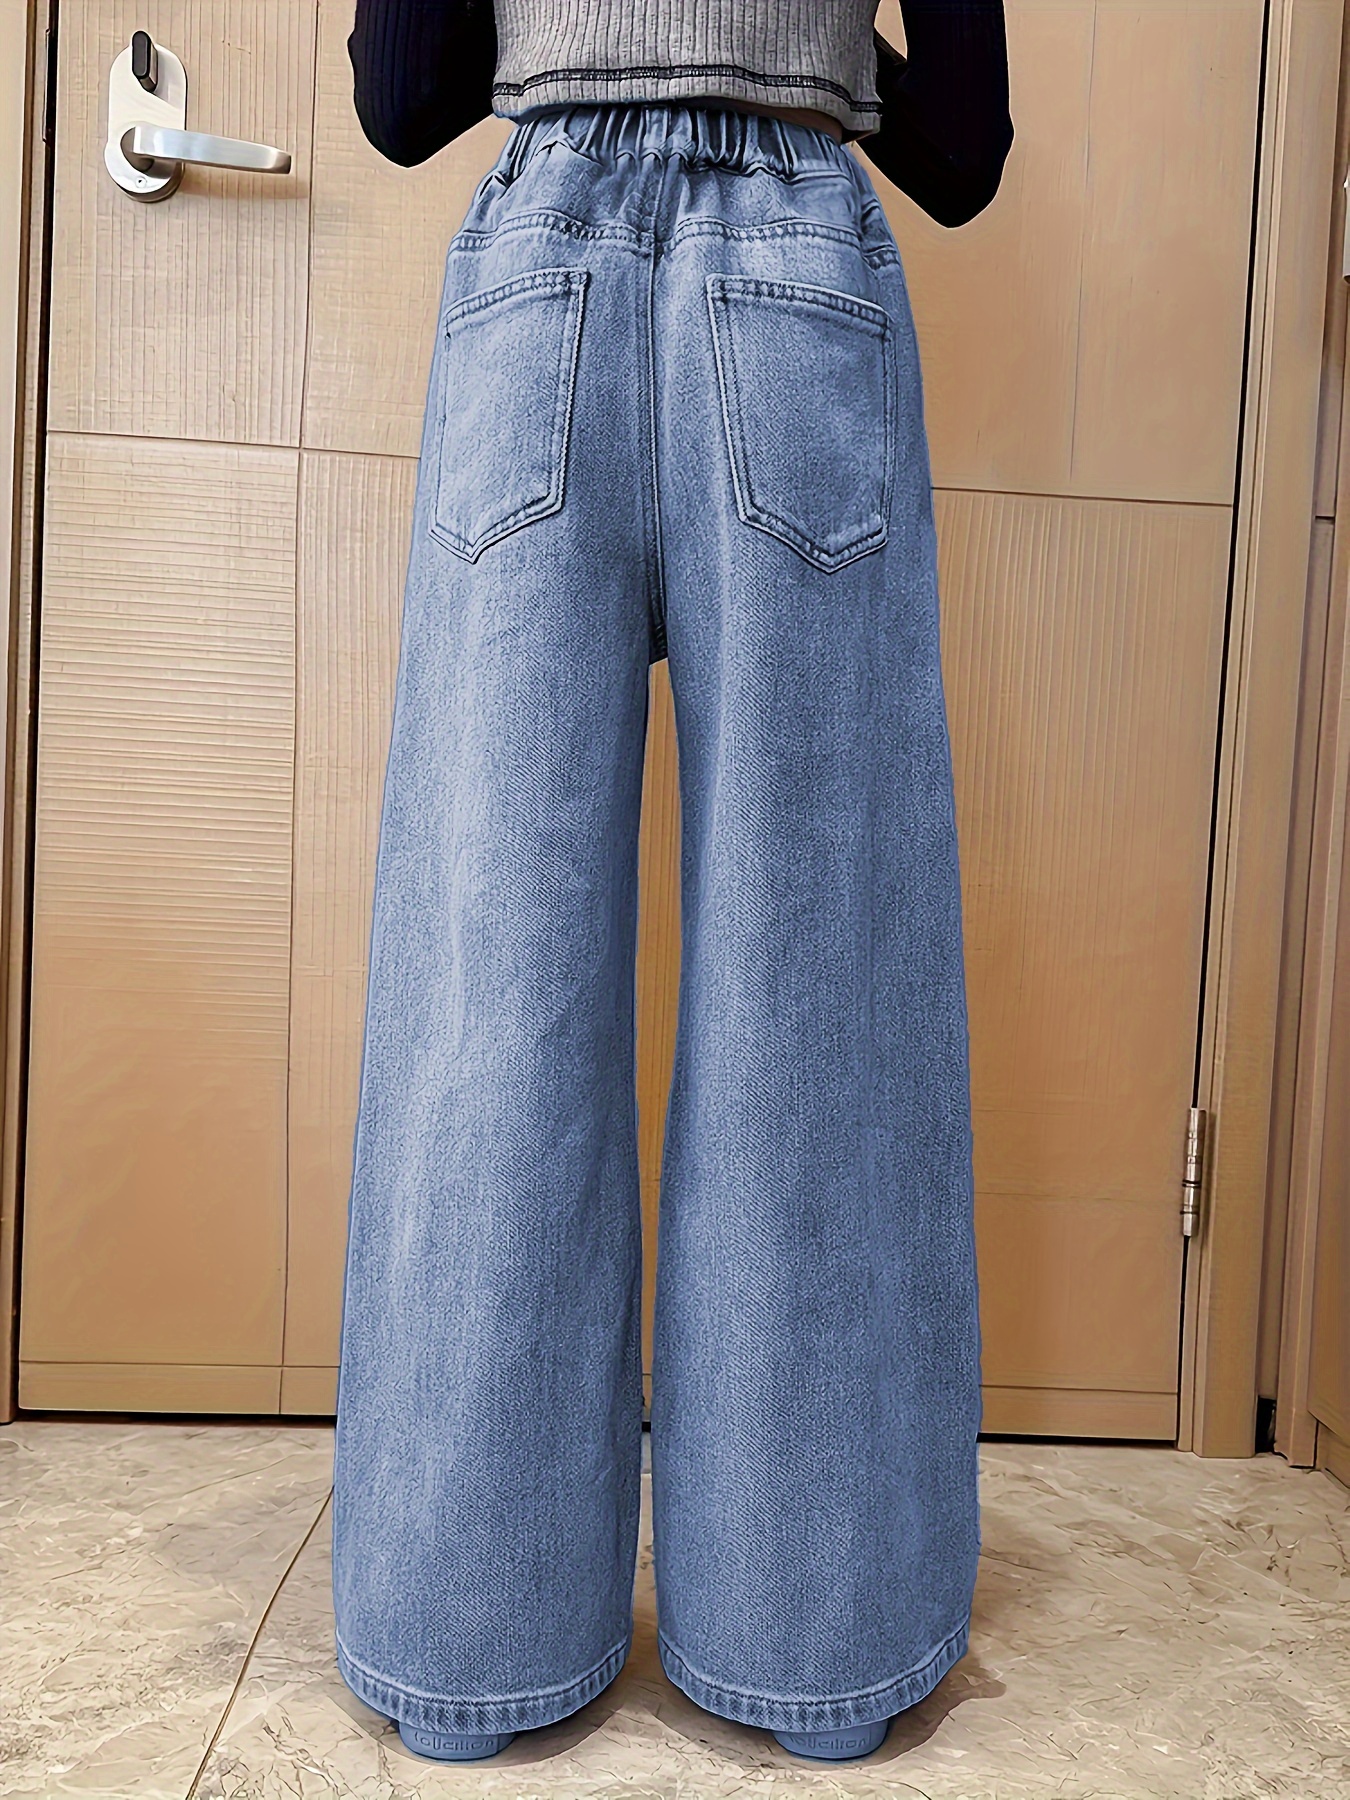 Trendy Women's Jeans & Denim